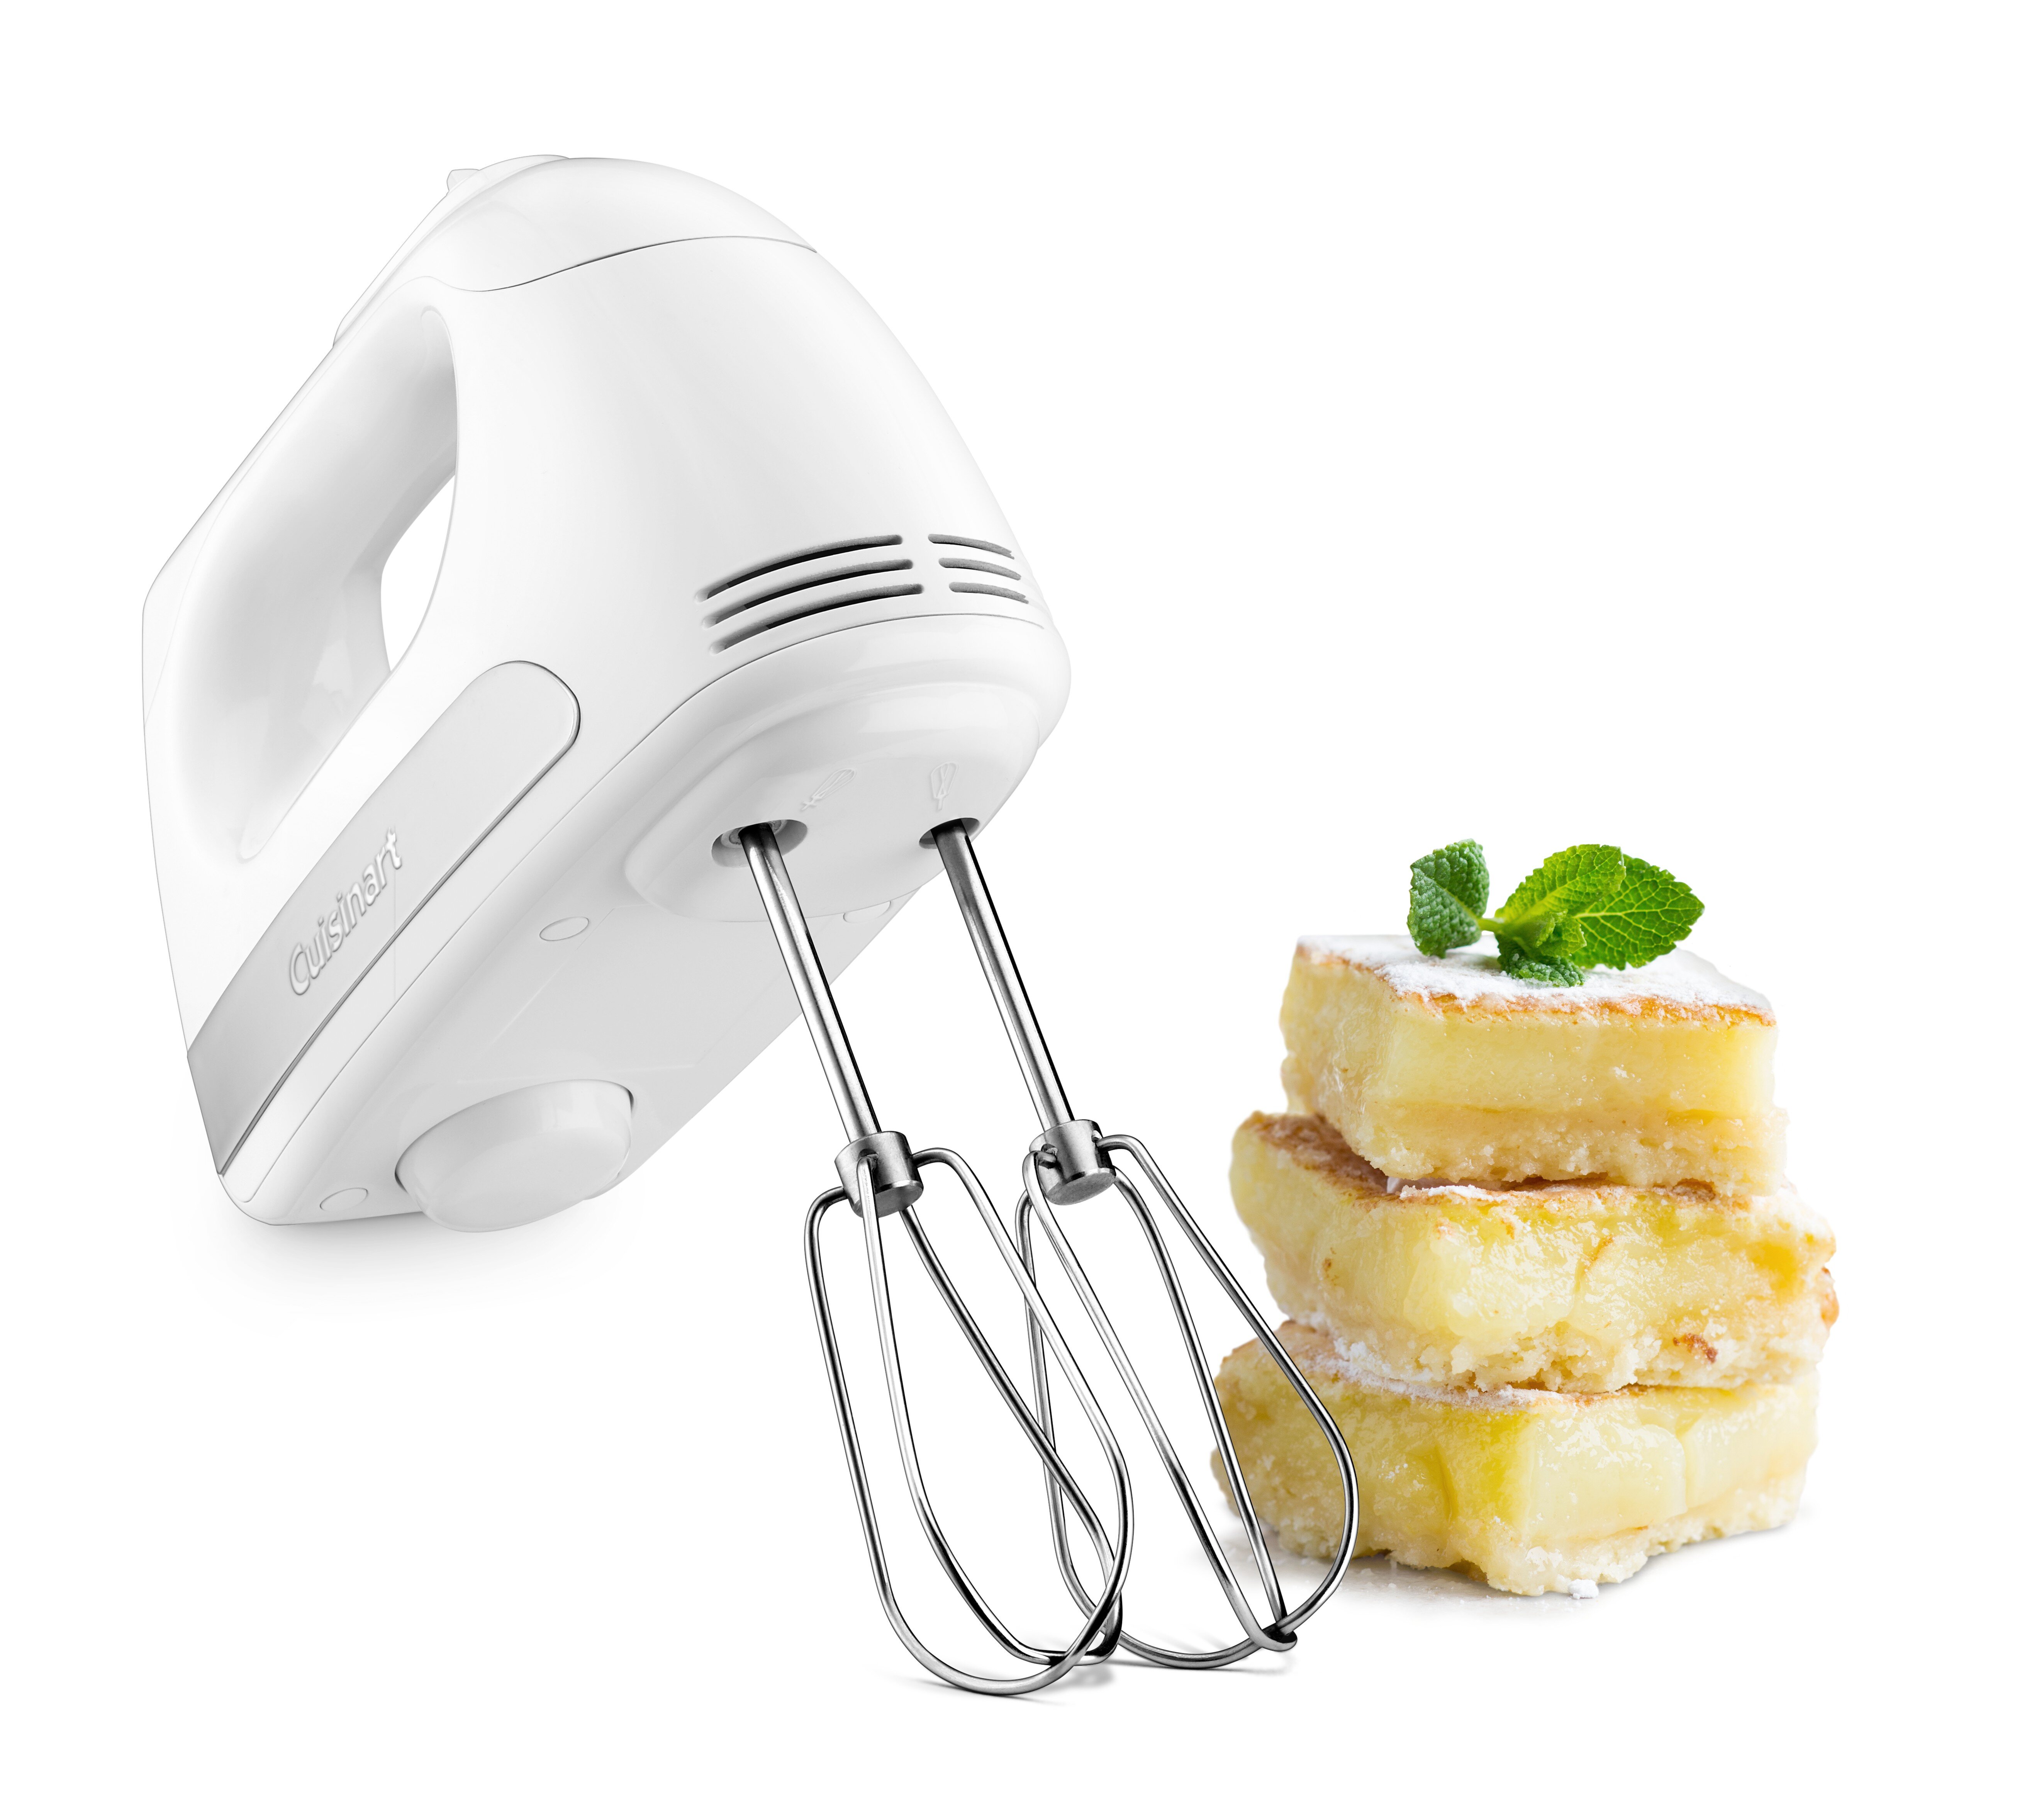 Cuisinart HM-50 Power Advantage 5-Speed Hand Mixer, White: Hand Mixer  Electric: Home & Kitchen 